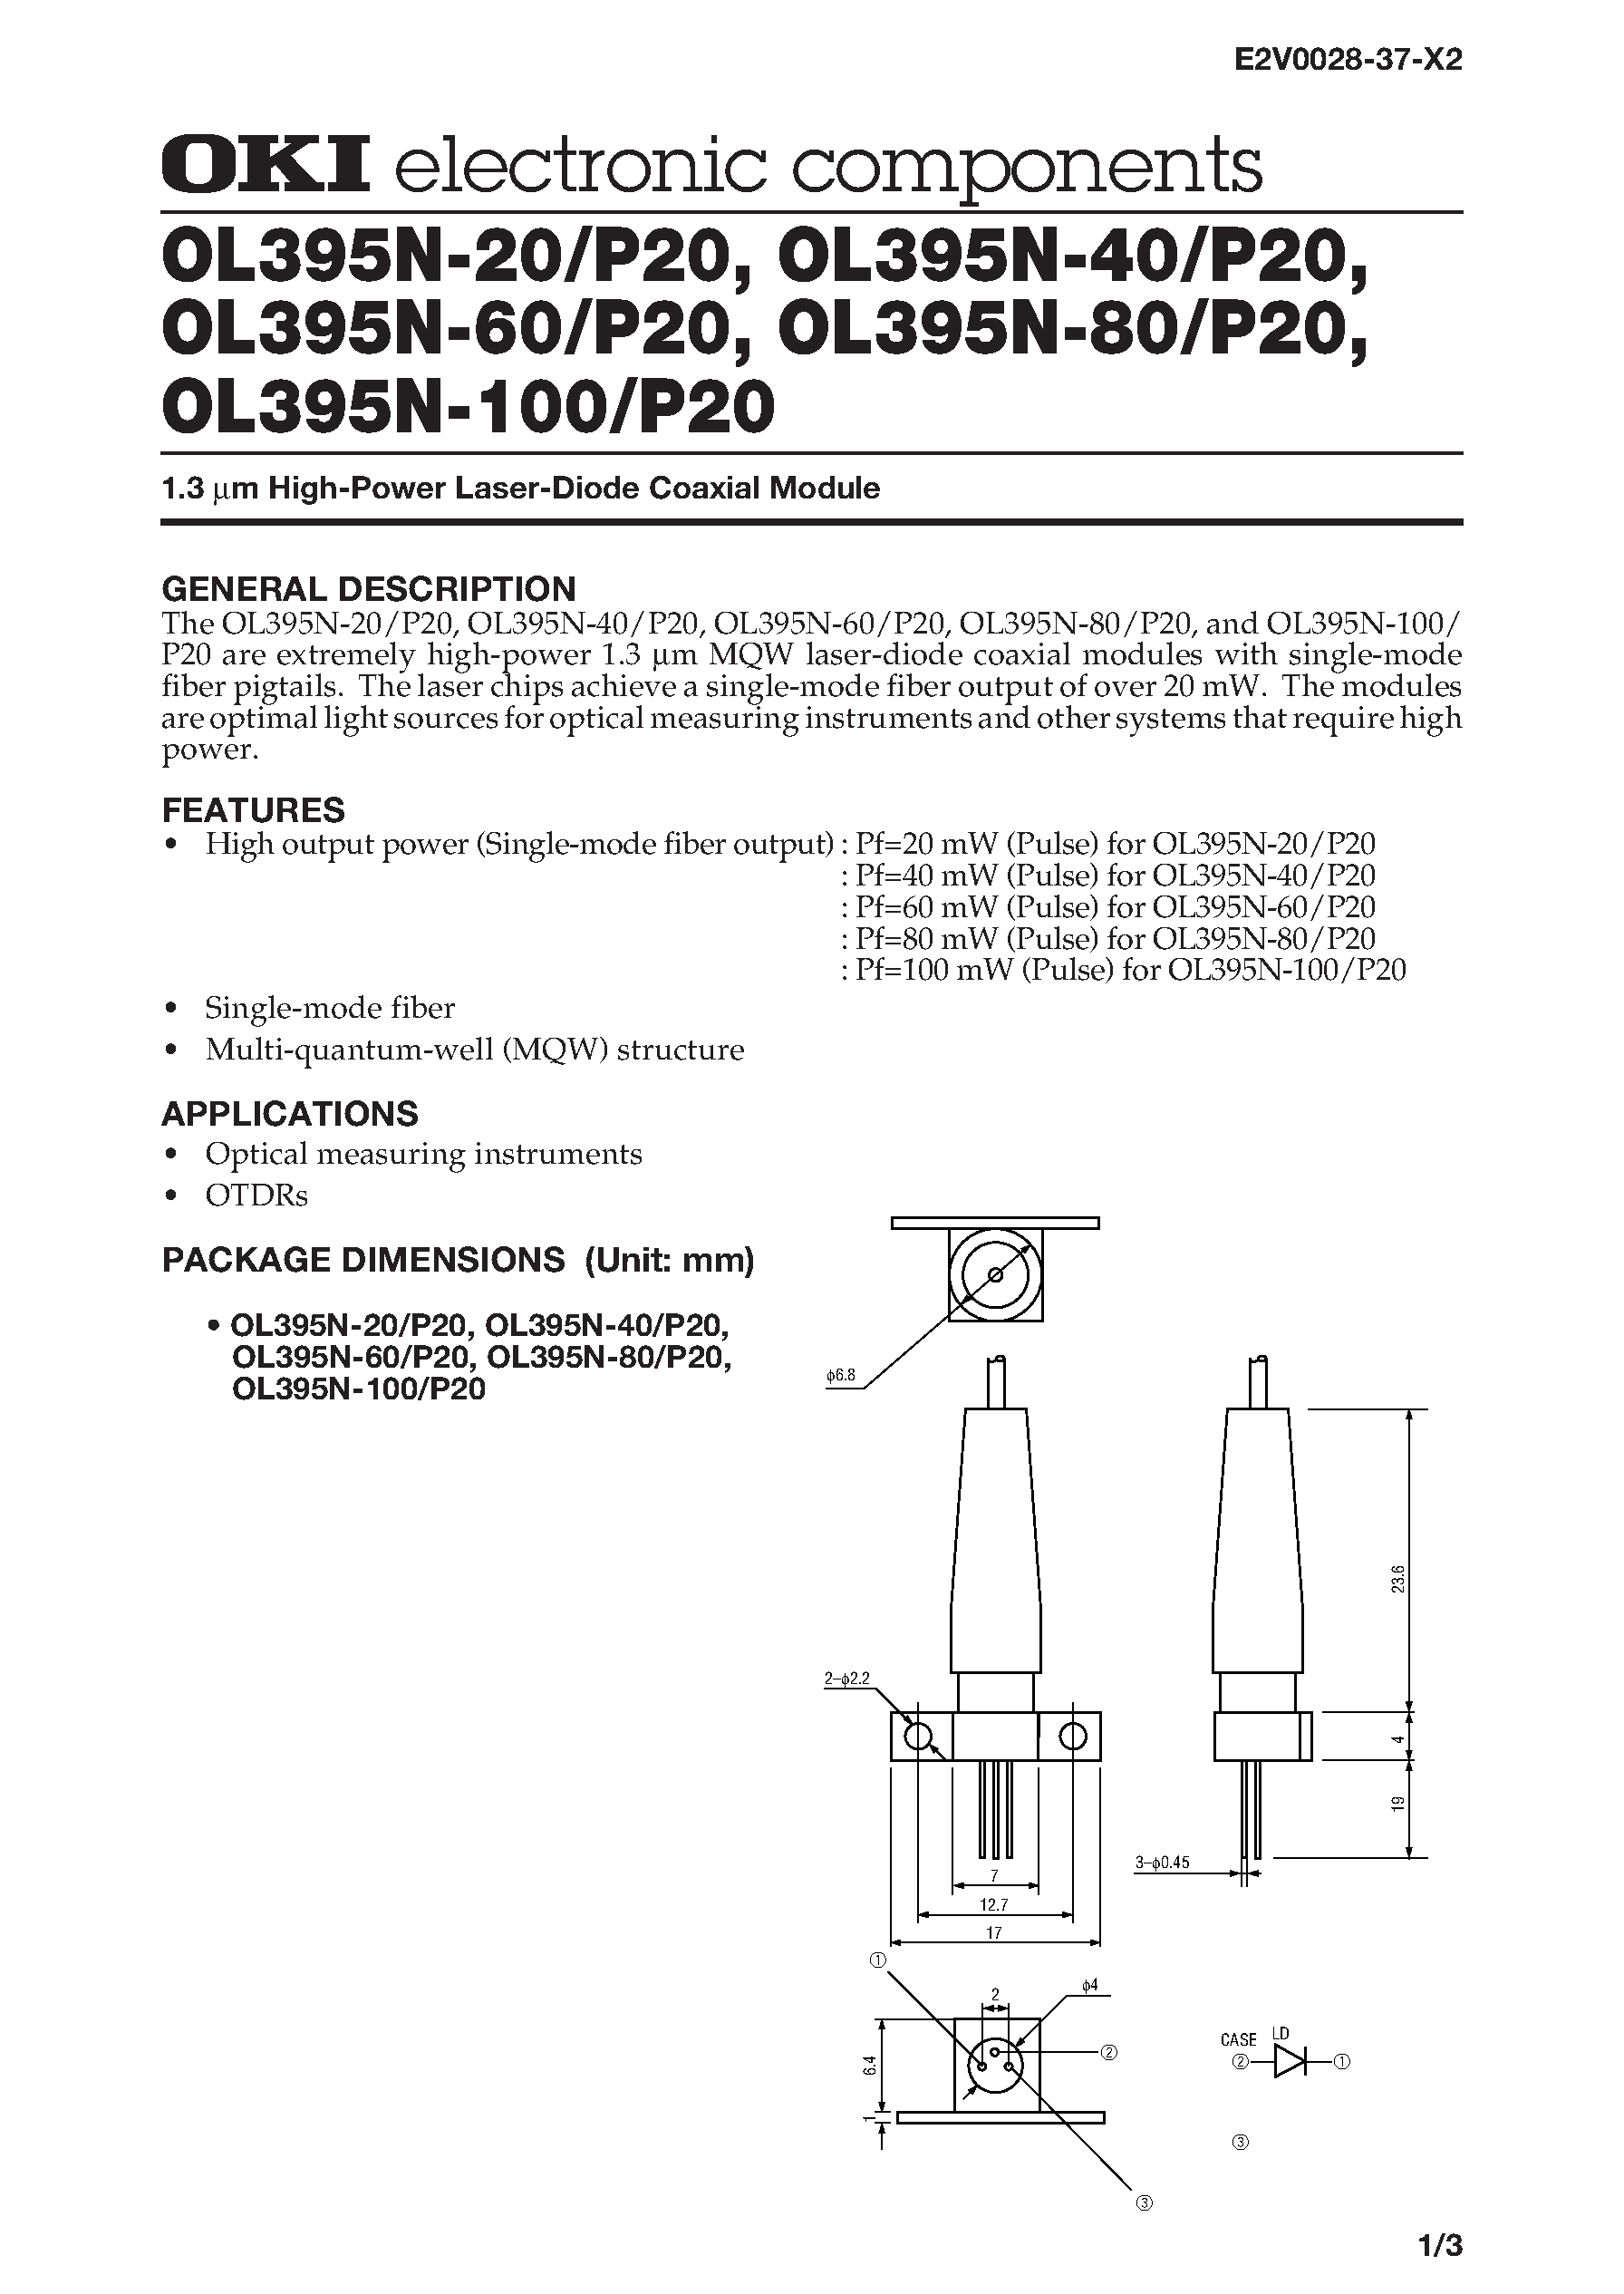 Datasheet OL395N-80 - 1.3 m High-Power Laser-Diode Coaxial Module page 1